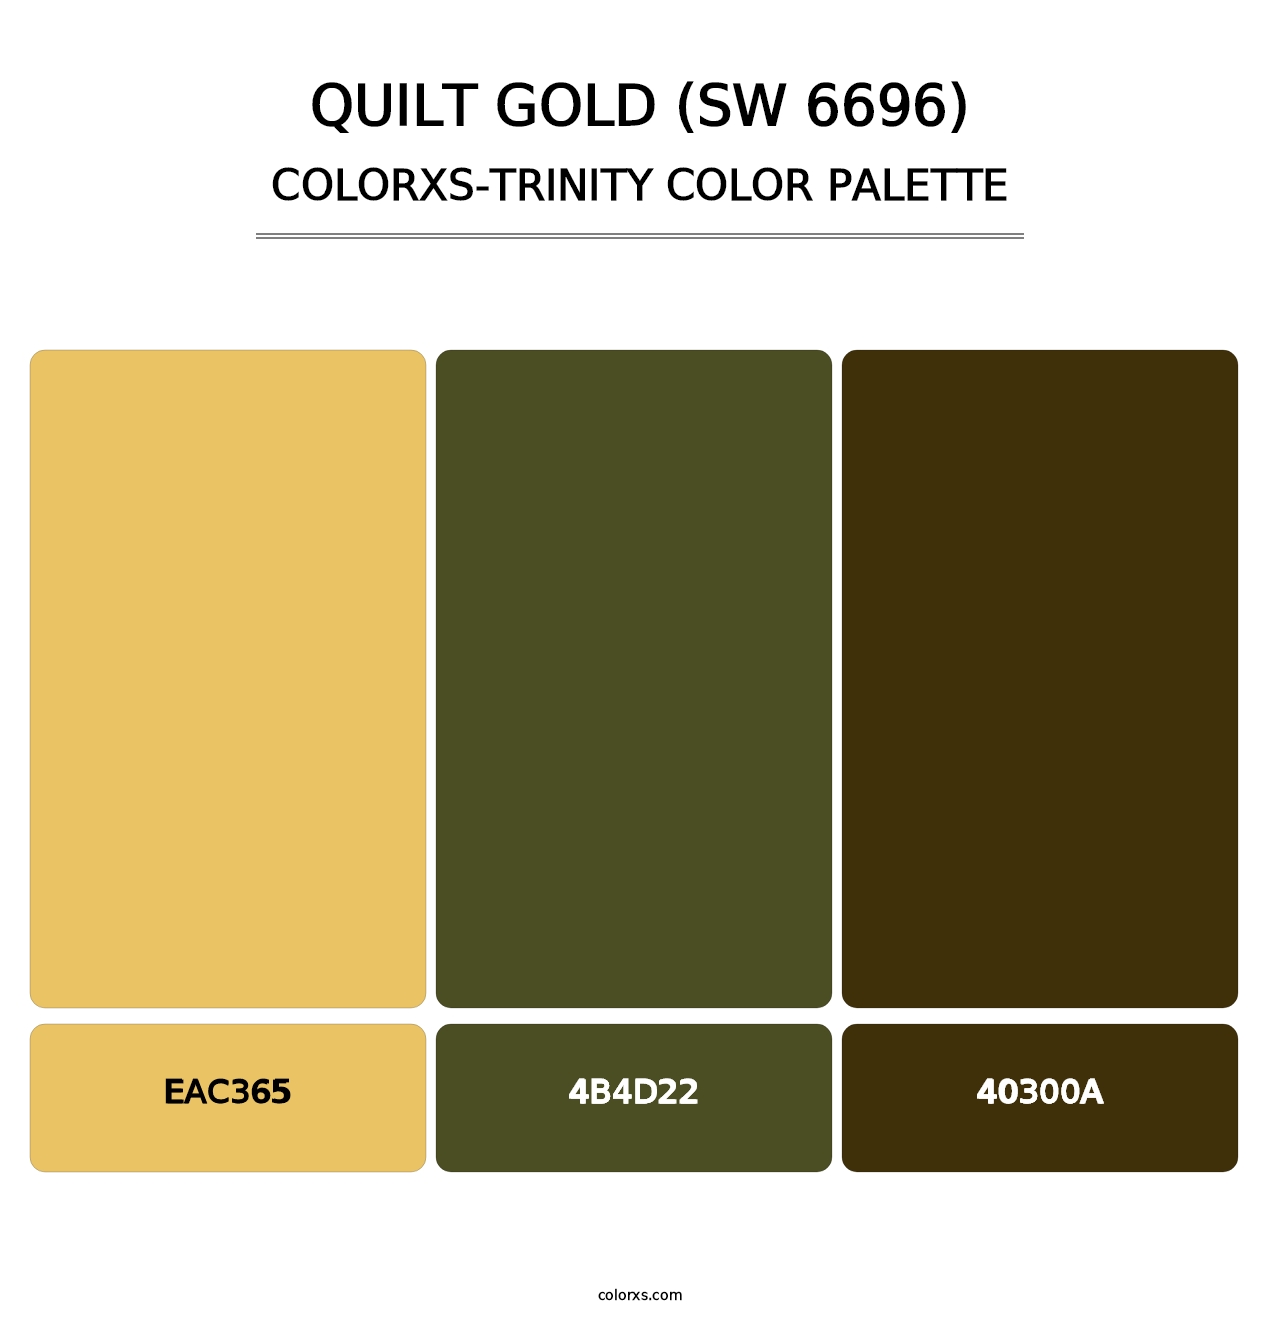 Quilt Gold (SW 6696) - Colorxs Trinity Palette